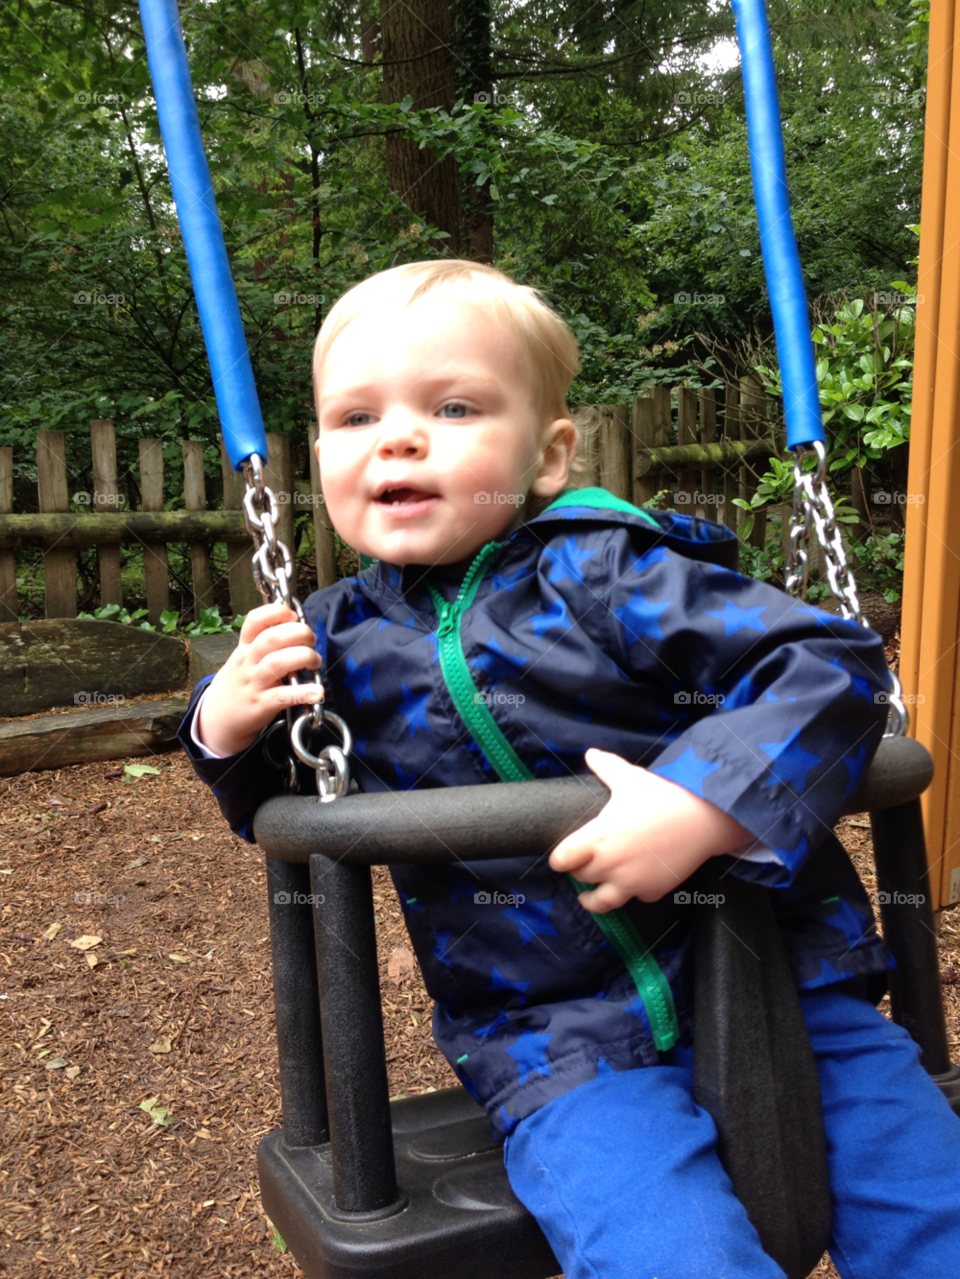 Child, Swing, Playground, Fun, Outdoors